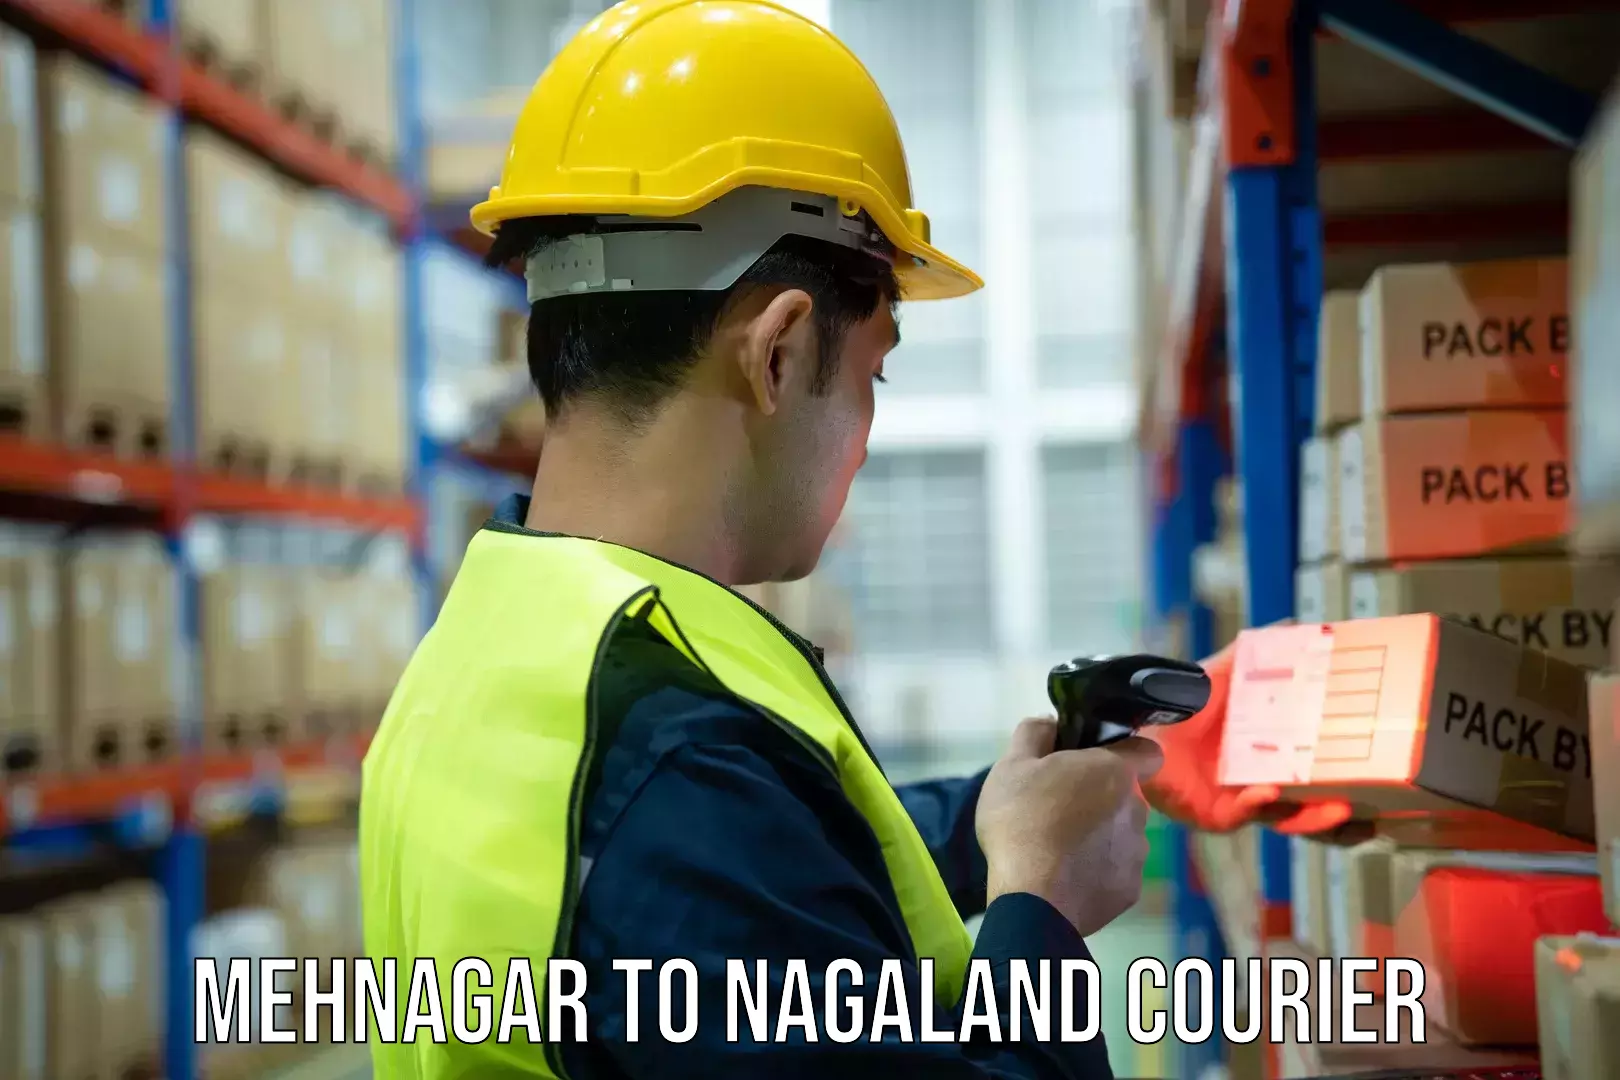 Courier app Mehnagar to Nagaland